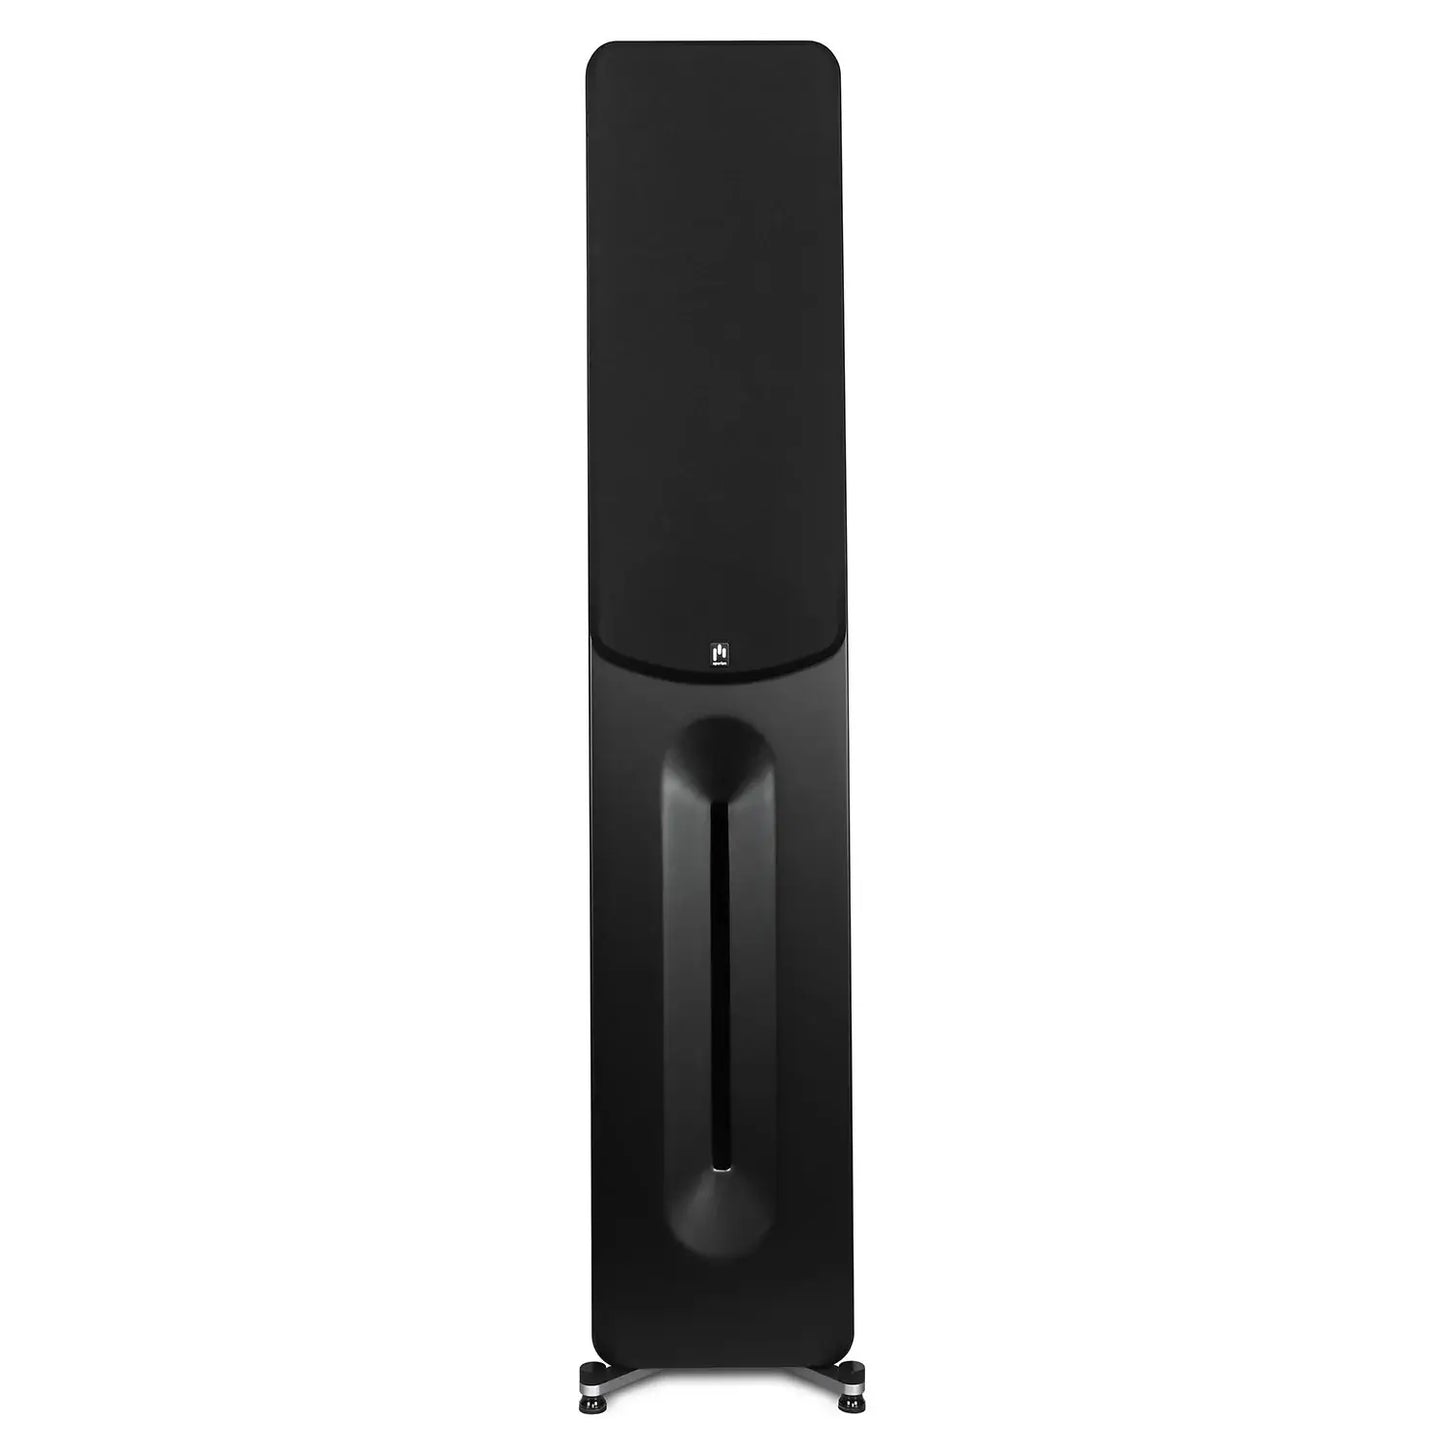 Aperion-Novus-N6T-Dual-6.5"-2-Way-Floorstanding-Tower-Speaker-Front-Grille-On-aperionaudio